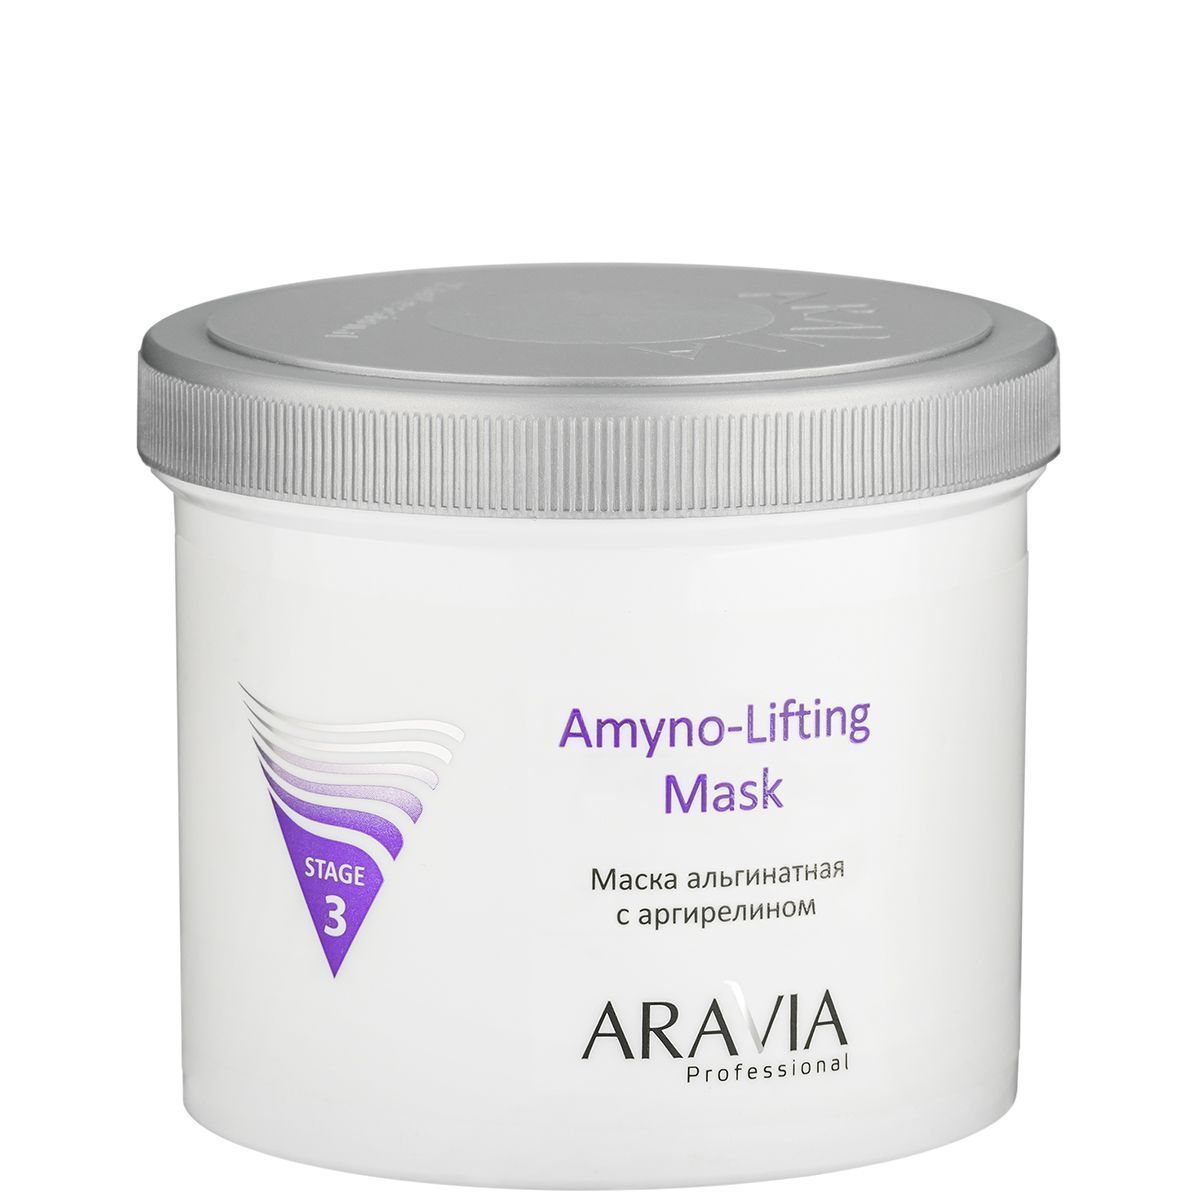 Aravia Professional Маска альгинатная с аргирелином Amyno-Lifting, 550мл